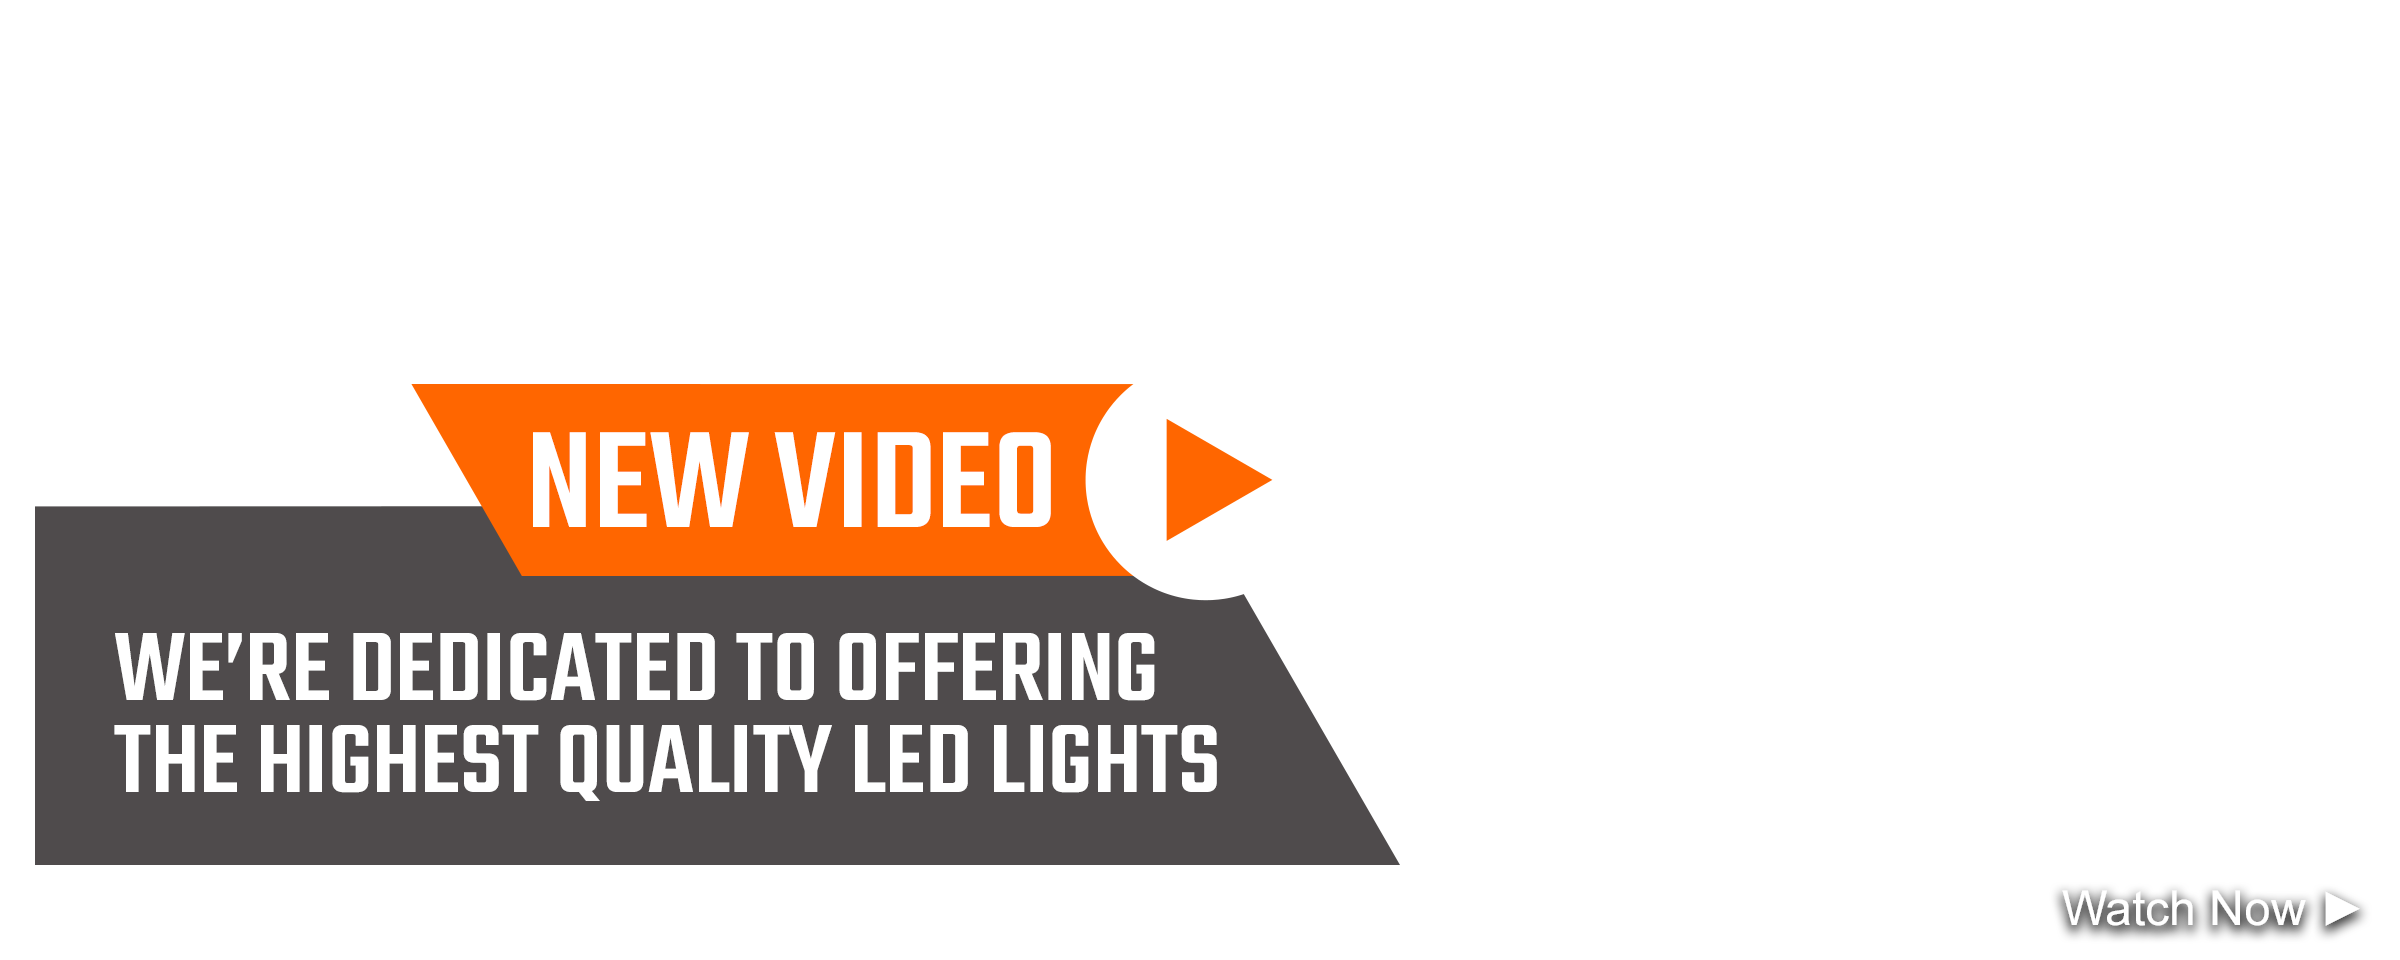 We have the highest quality LED lights